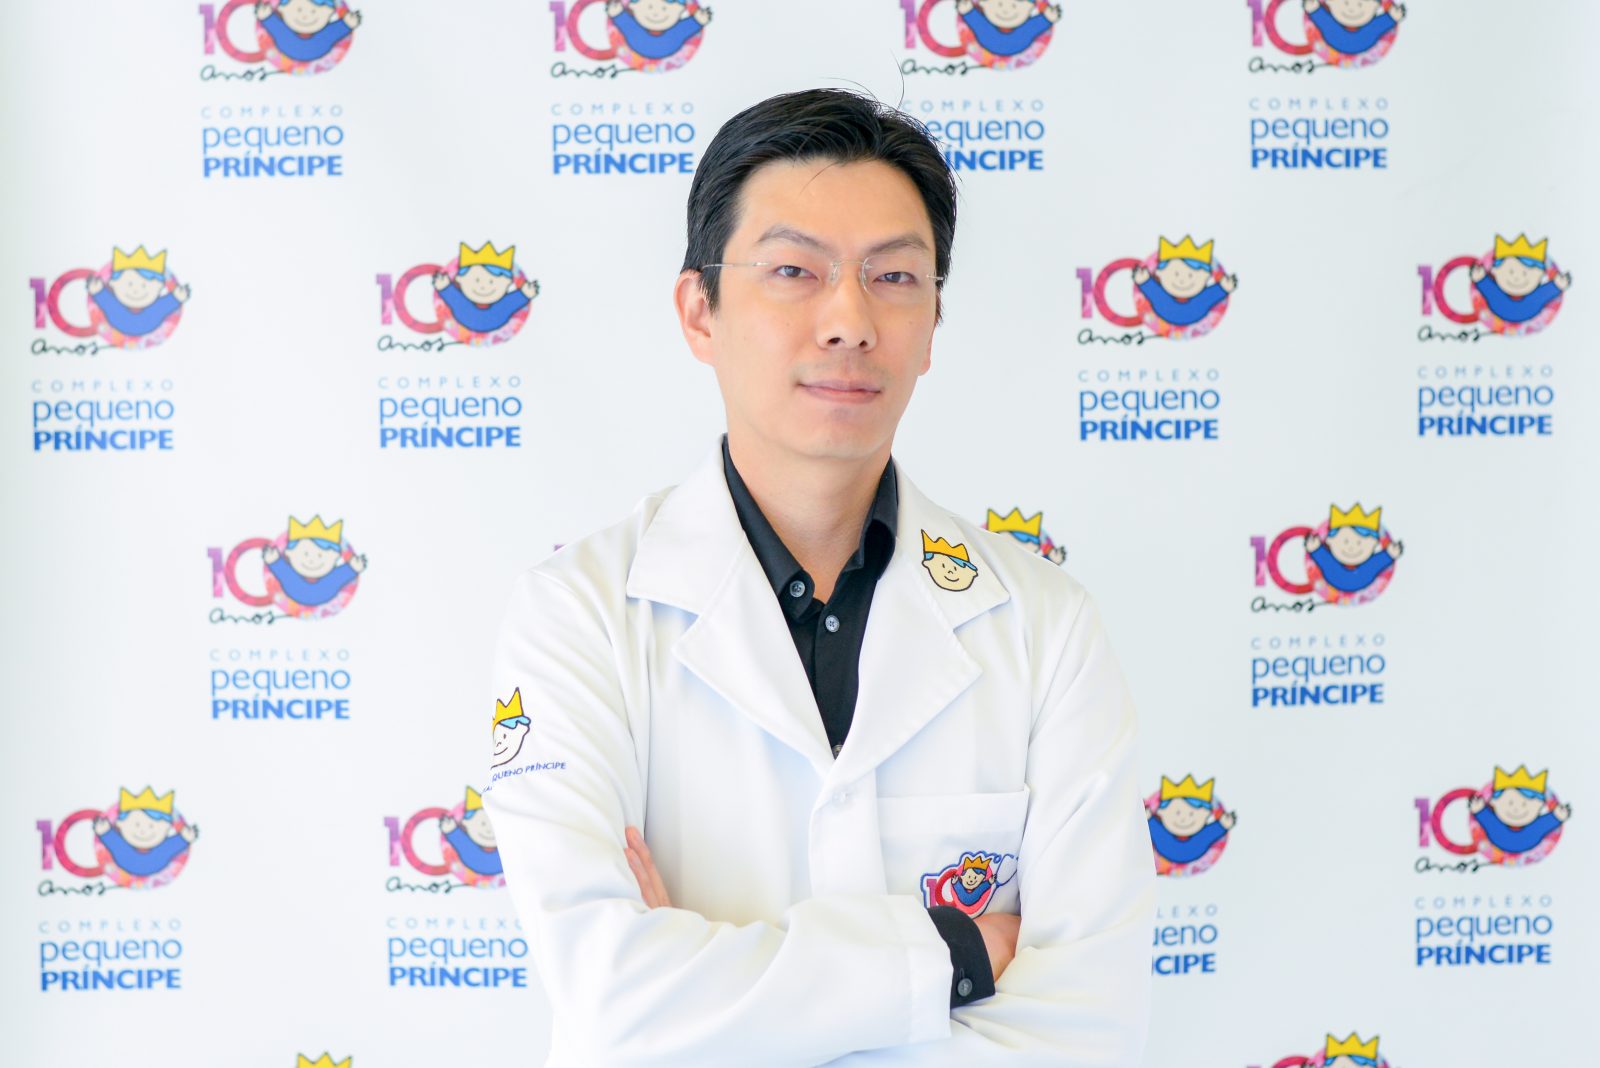 Dr. Marilson Hideki Sato